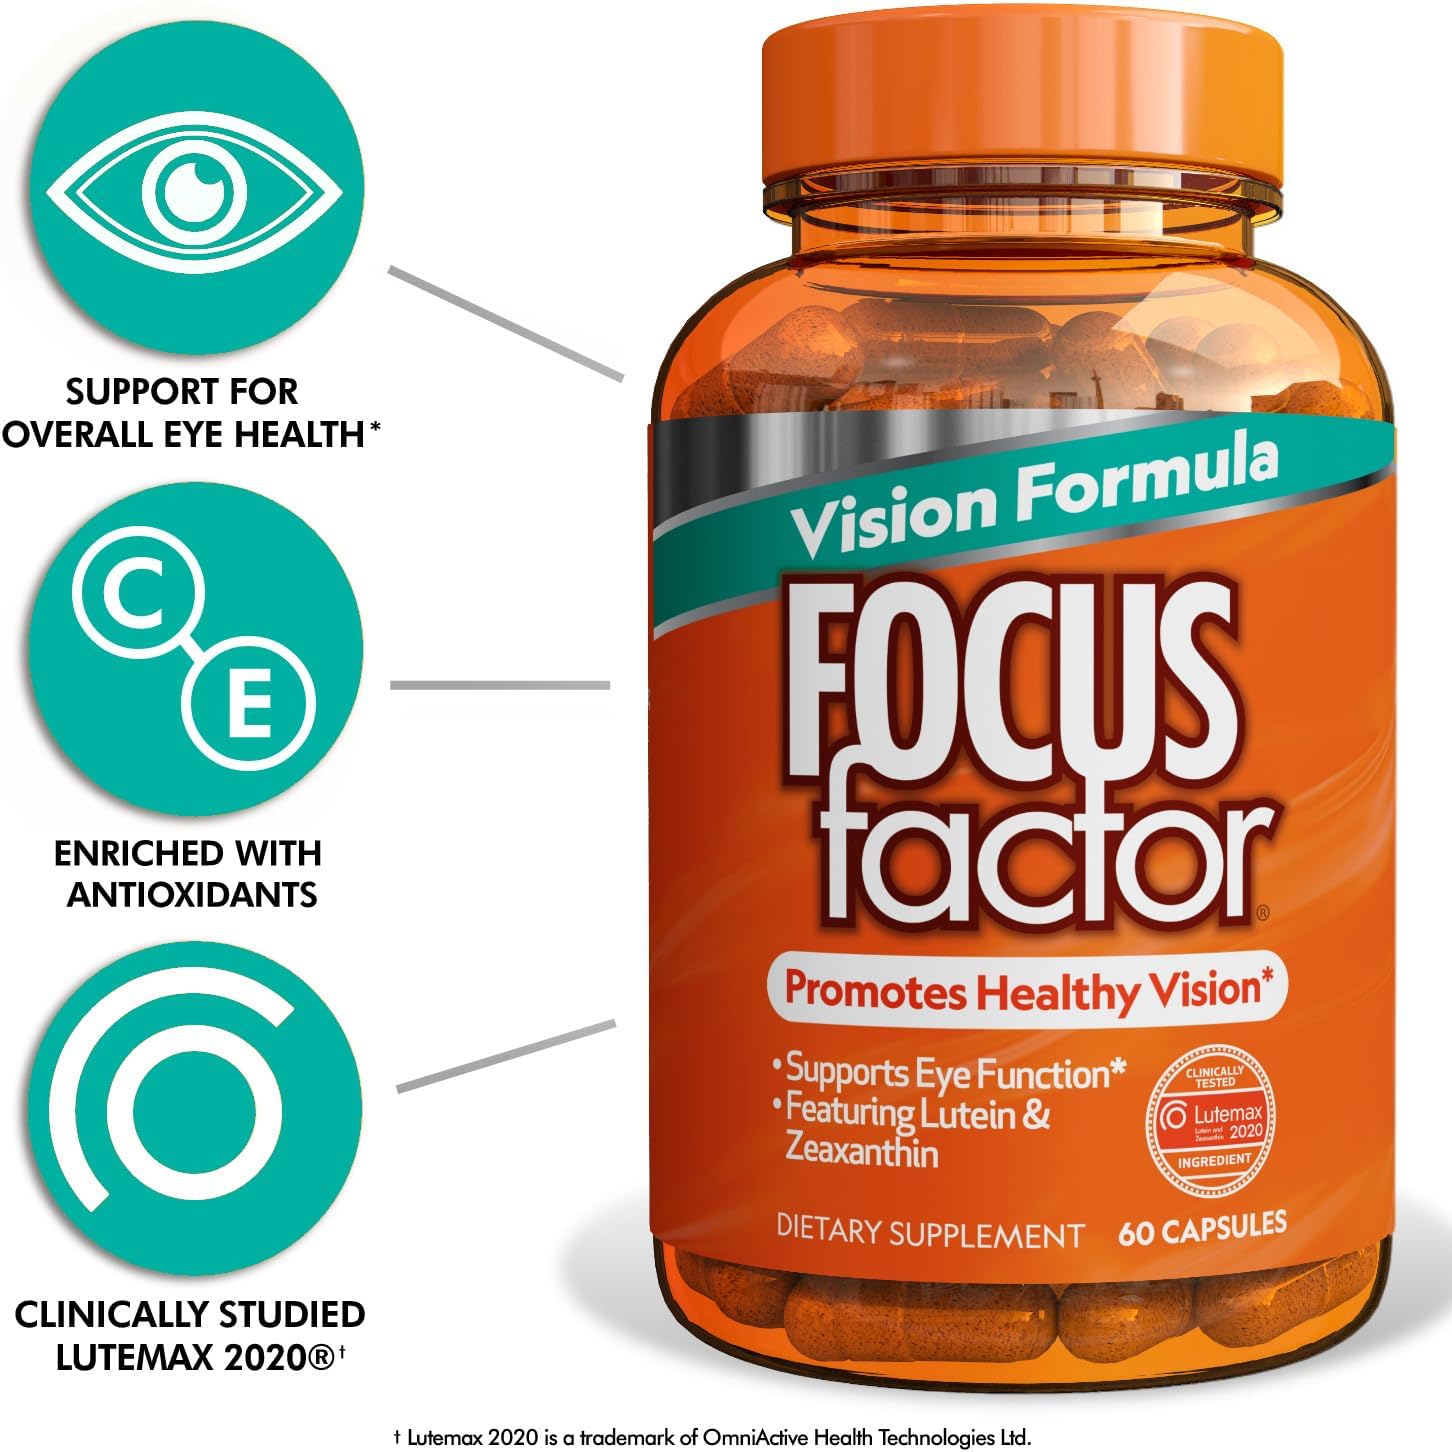 Focus Factor Vision Formula (60 Count) - Eye Vitamins with Vitamin C, 